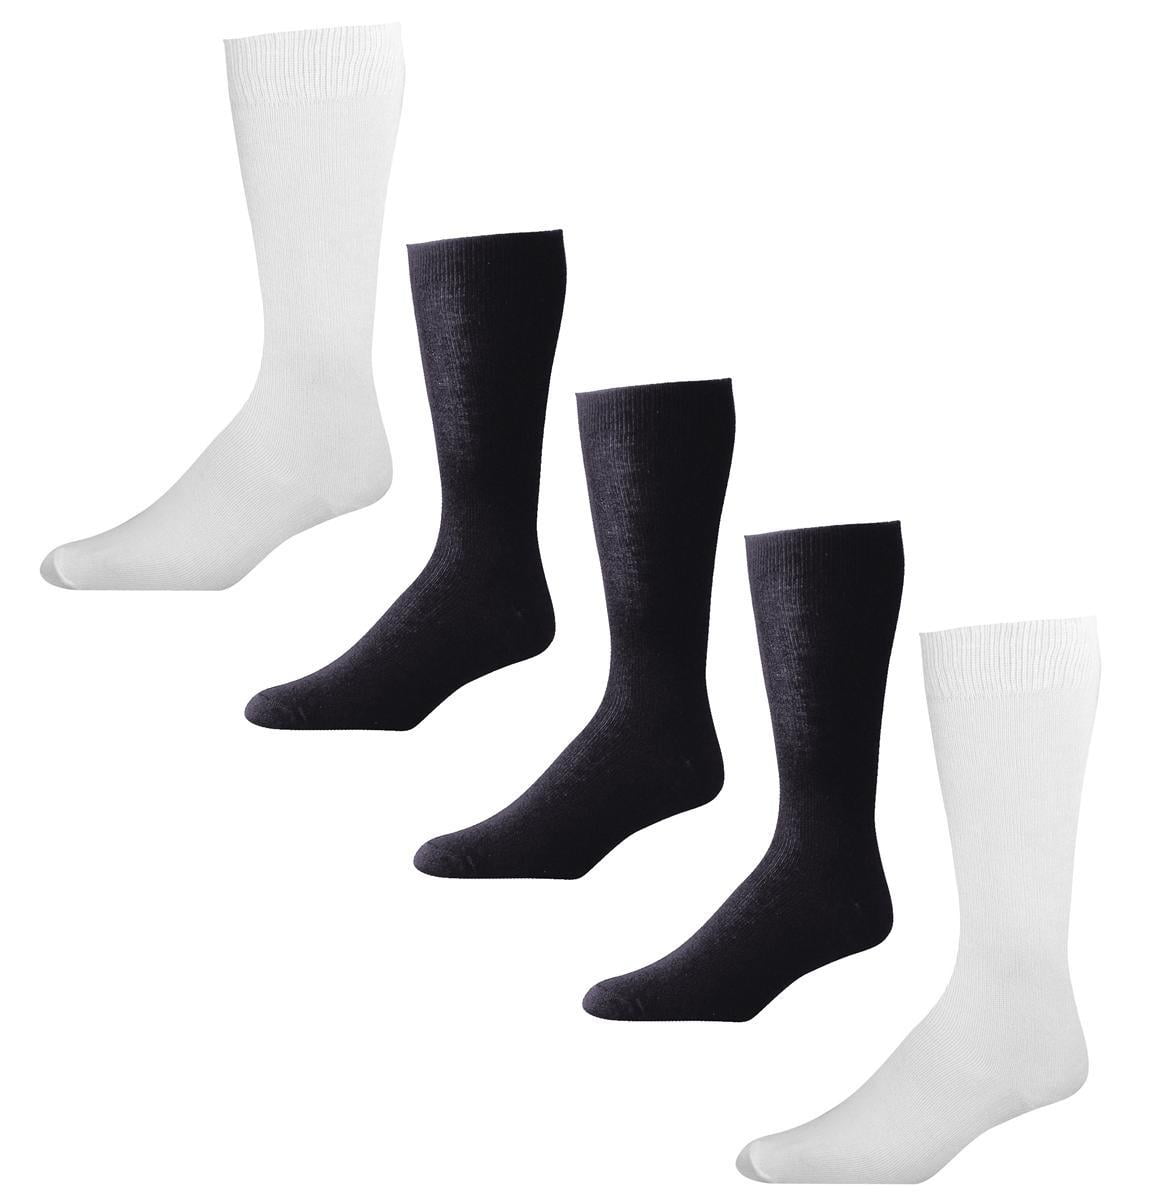 Bundle Up for Warmth and Save! 3 Black & 2 White Polypropylene Sock ...